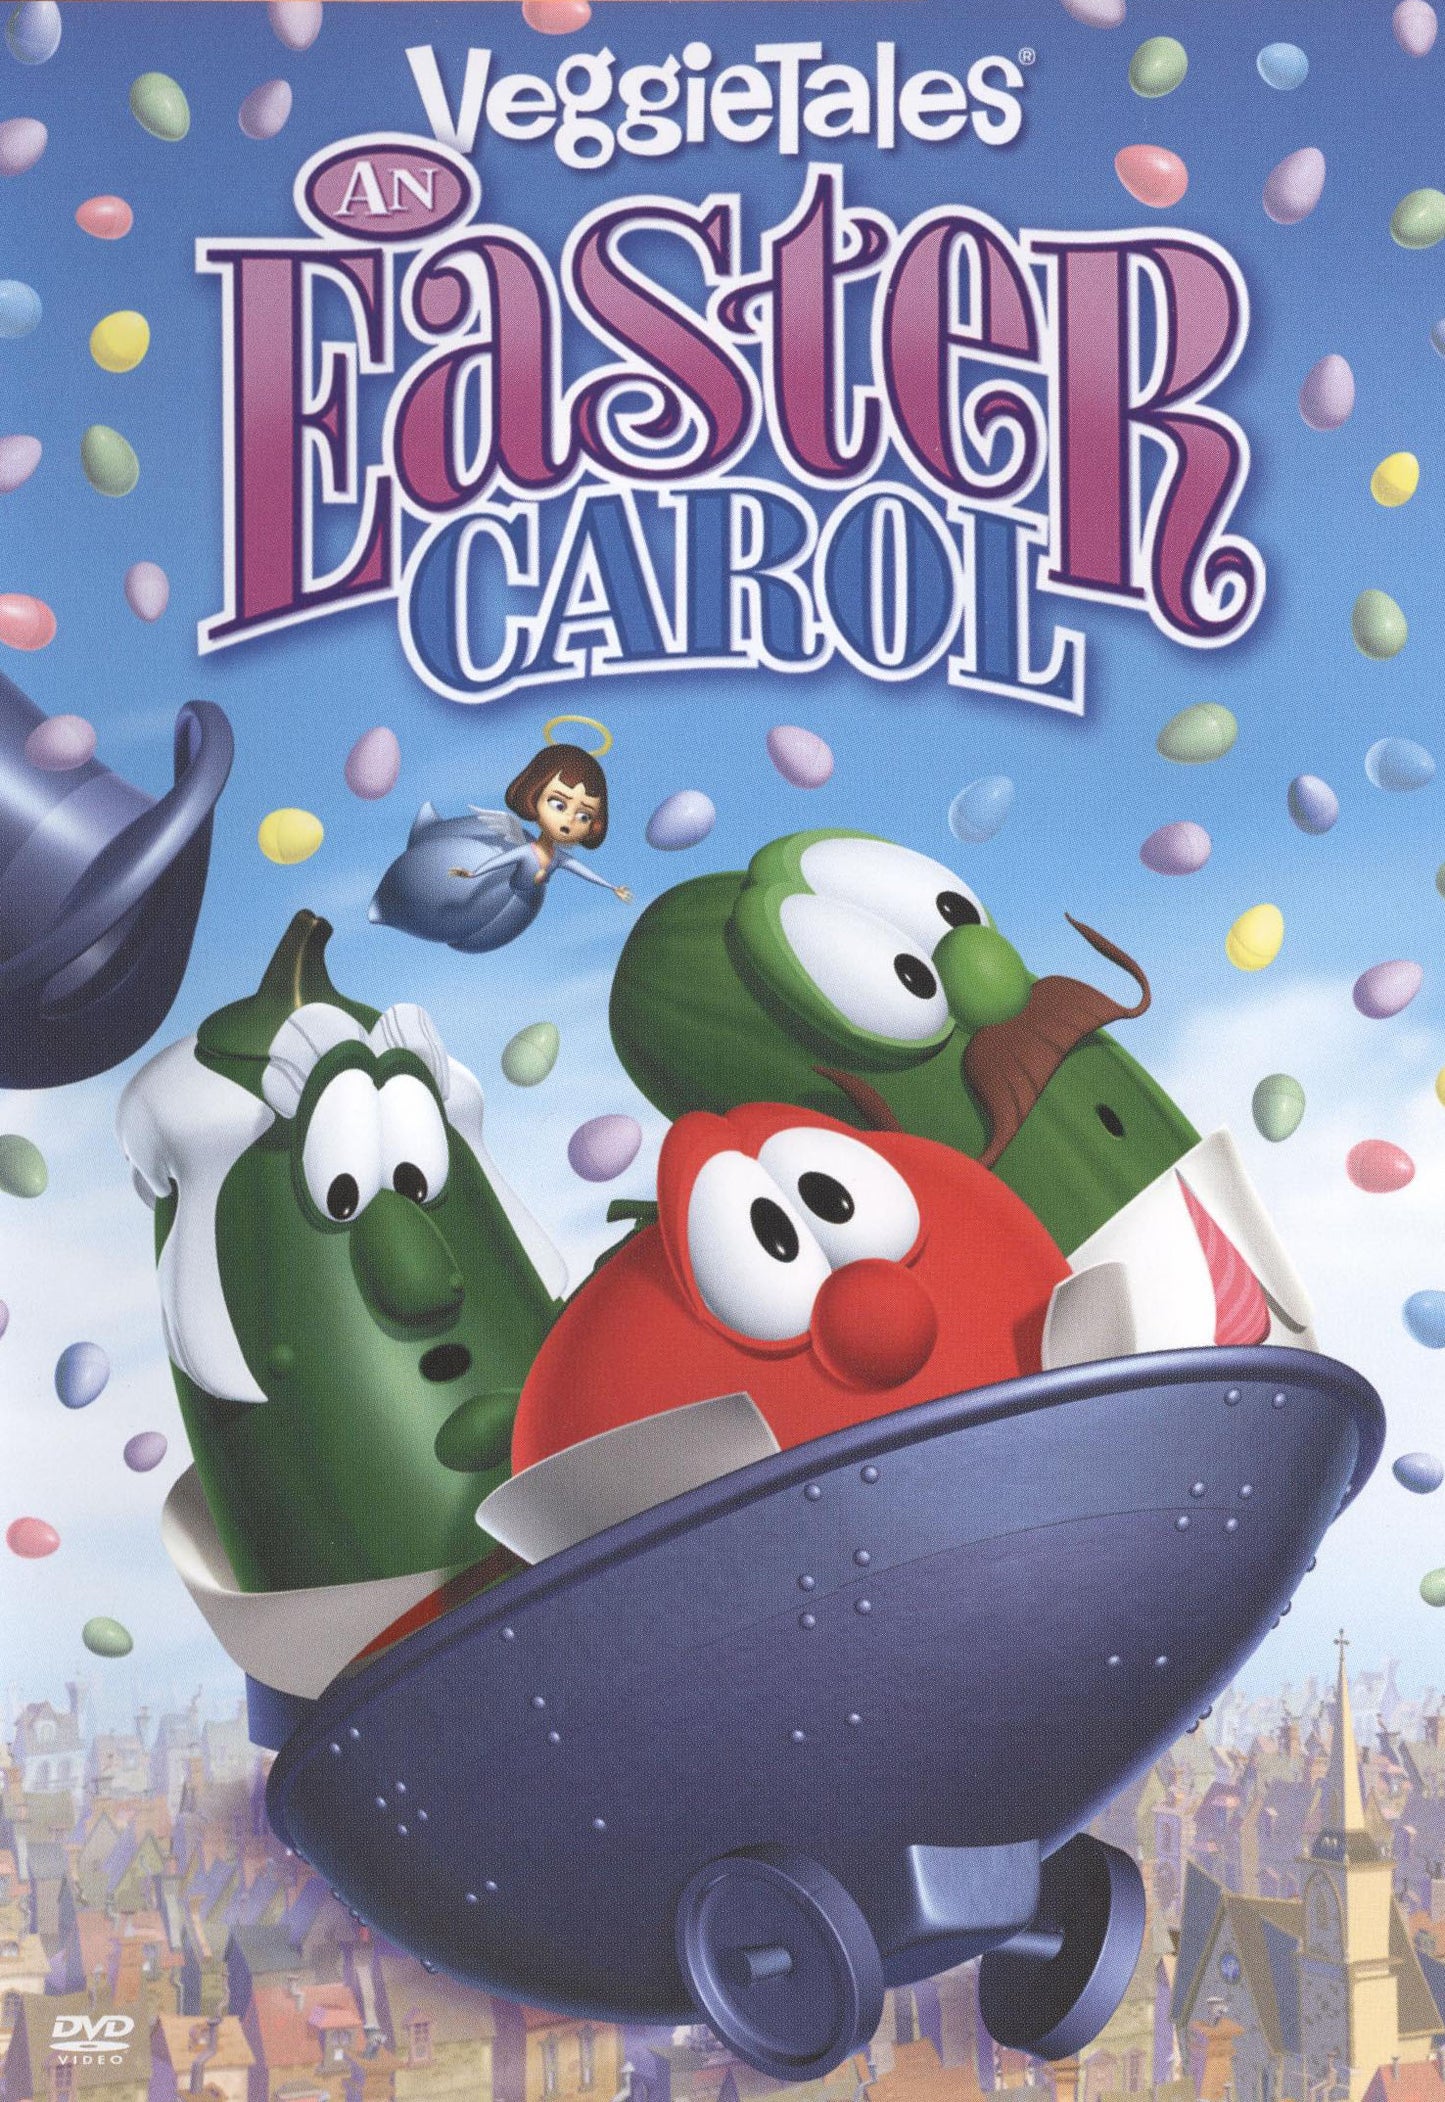 Veggie Tales: An Easter Carol cover art